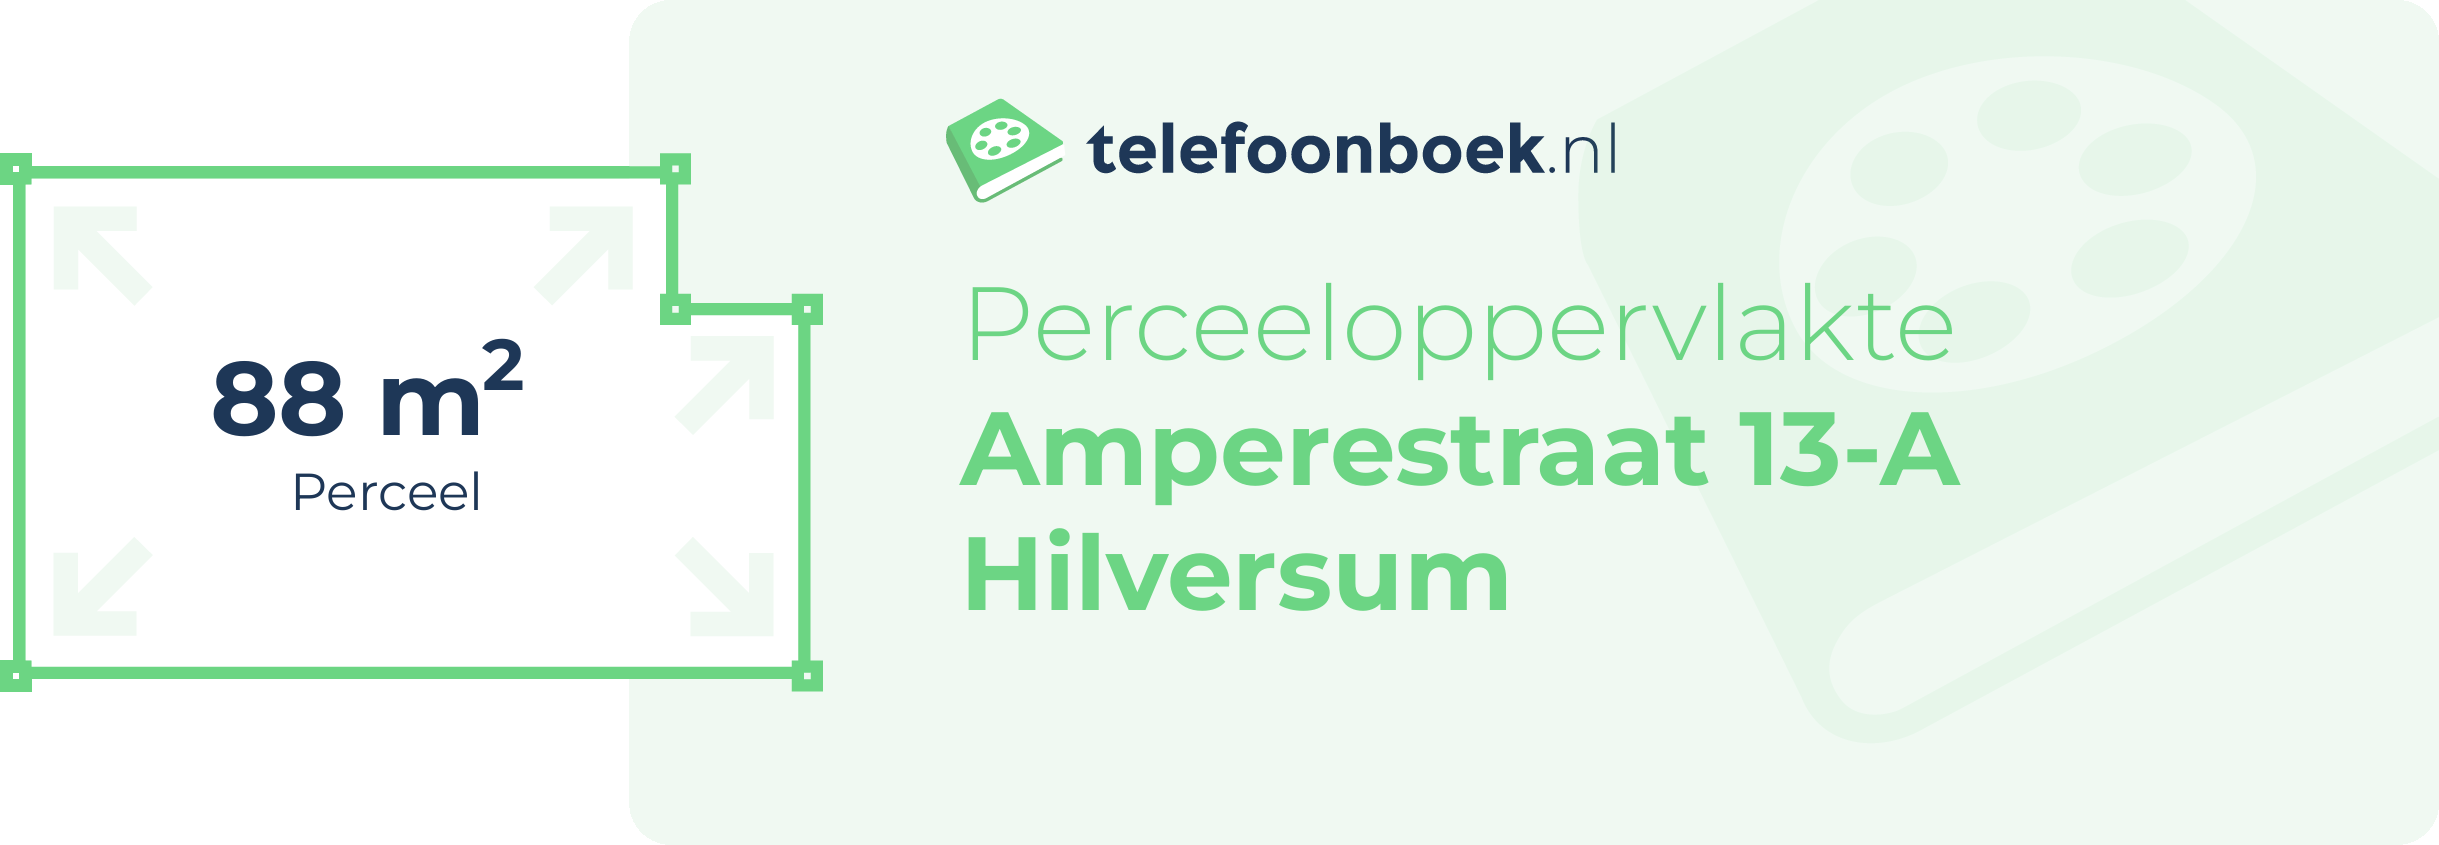 Perceeloppervlakte Amperestraat 13-A Hilversum